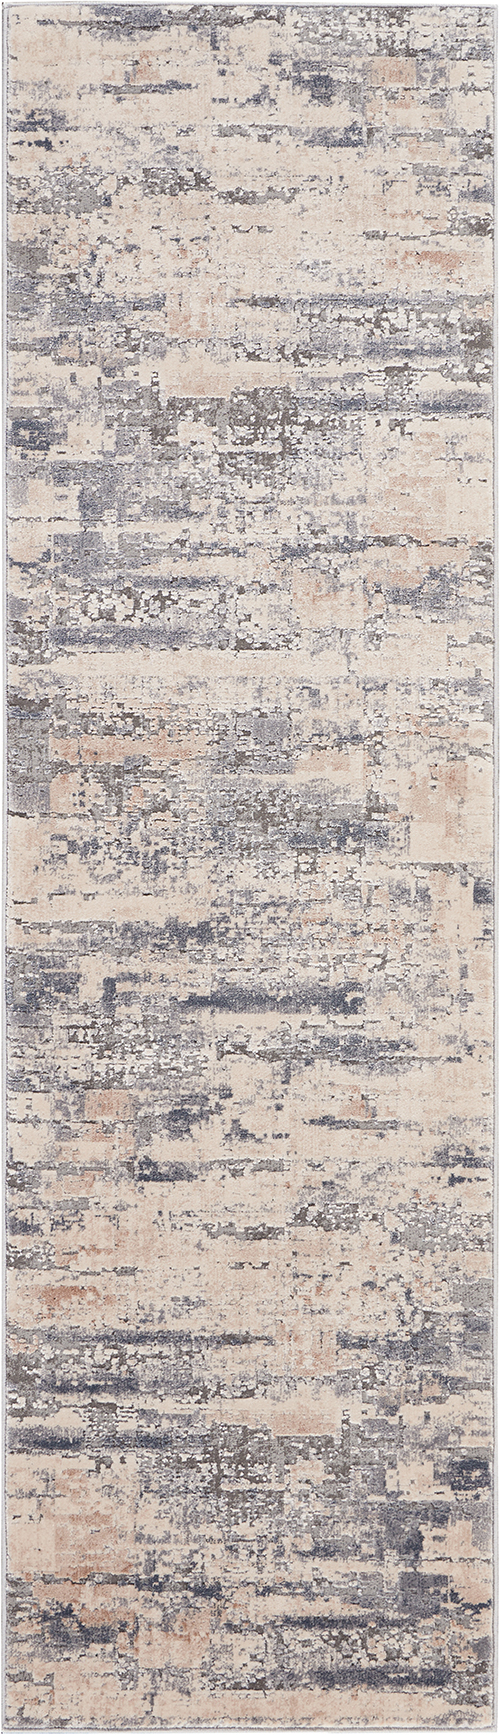 Nourison Rugs - Rustic Textures Runner RUS04 Rug in Beige / Grey - 2.3m x 0.66m